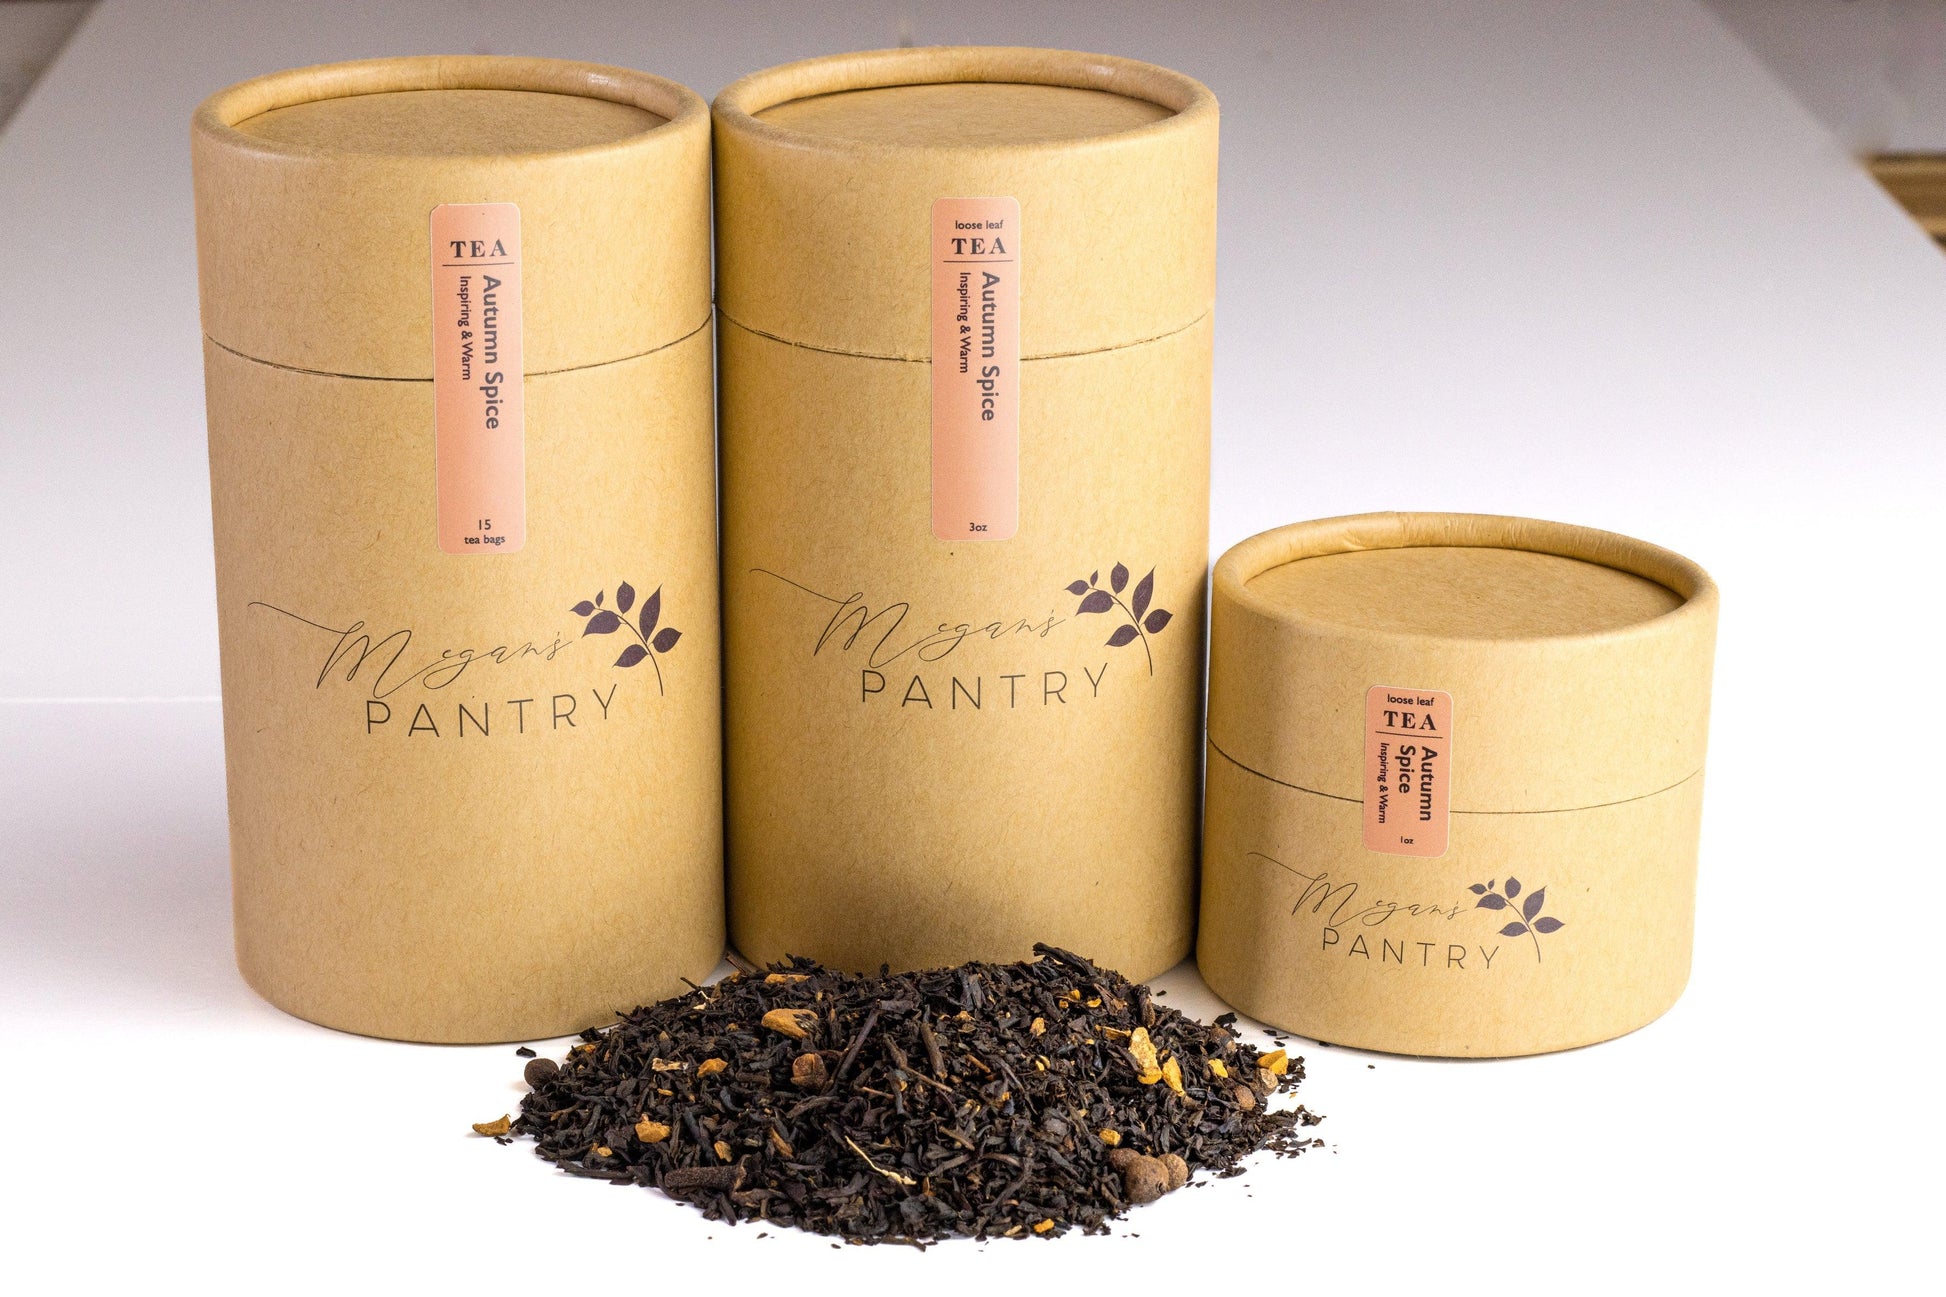 Autumn Spice Tea | Warm & Cozy Fall Tea